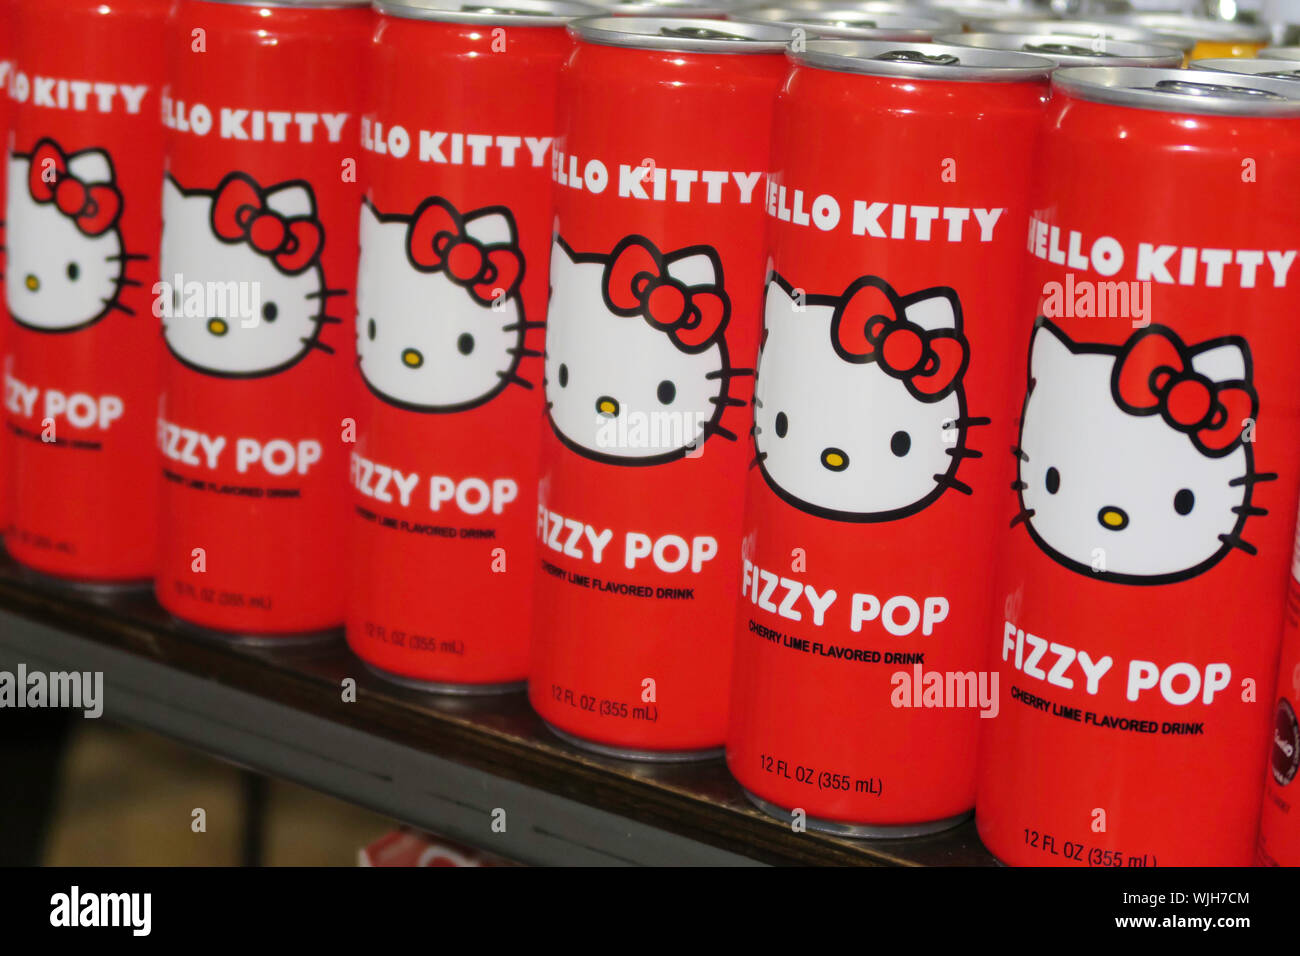 Hello Kitty Brand Fizzy Pop Soft Drinks, NYc, USA Stock Photo